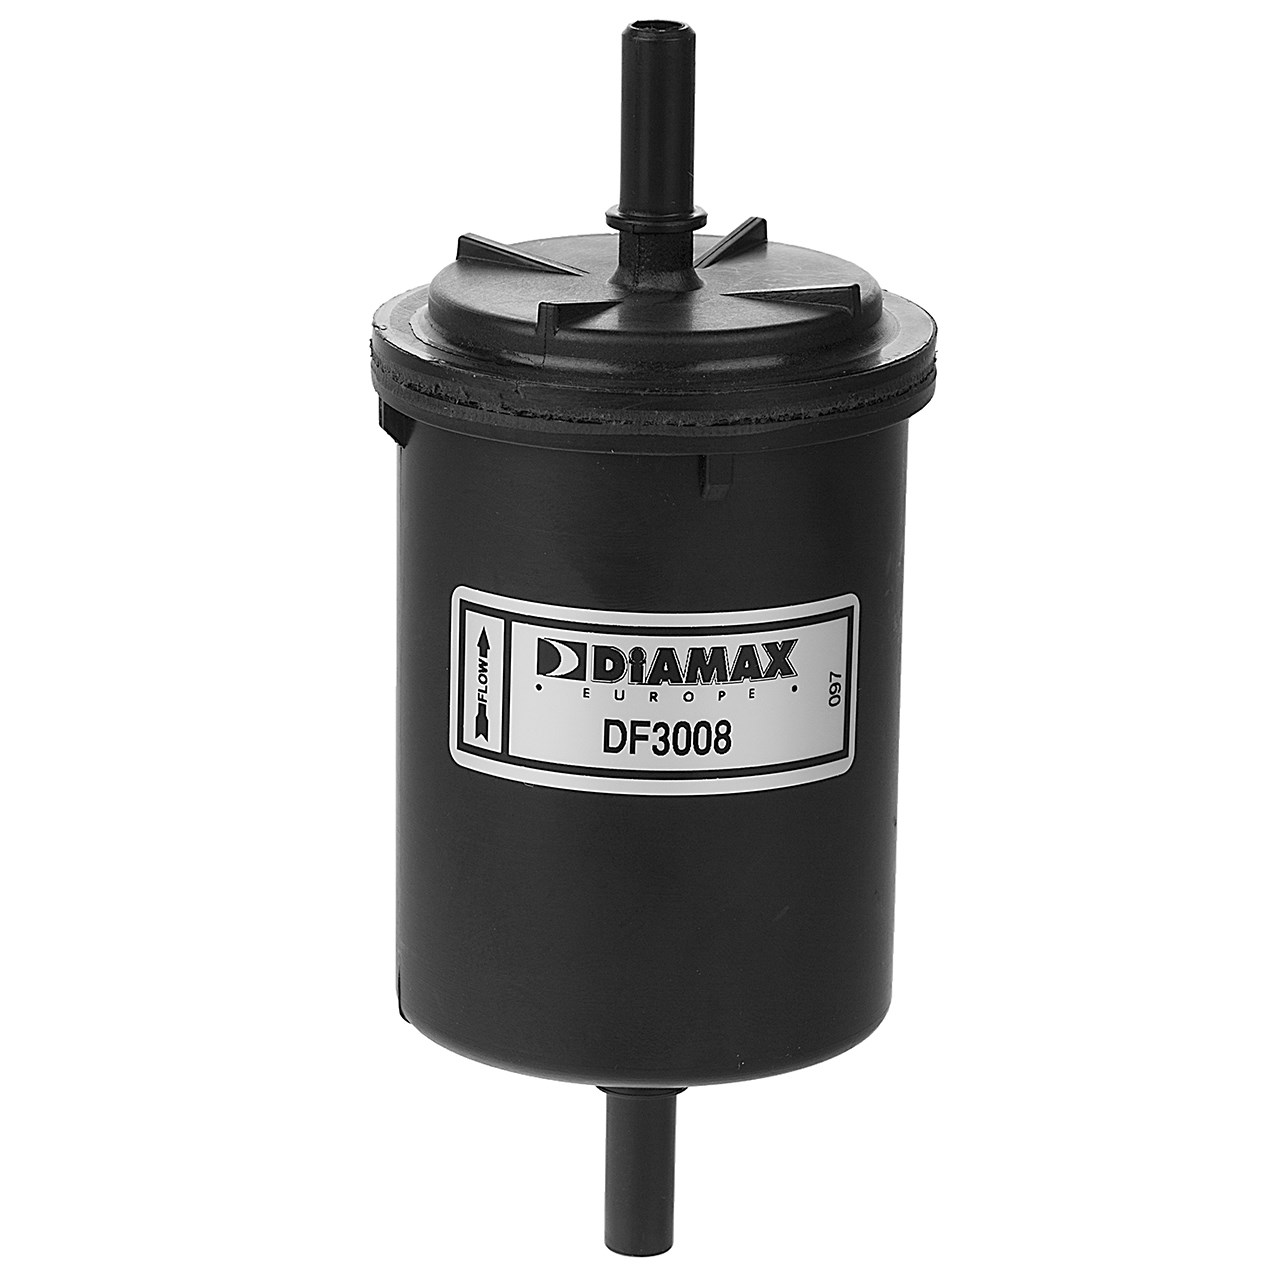 فیلتر سوخت دیامکس مدل DF3008